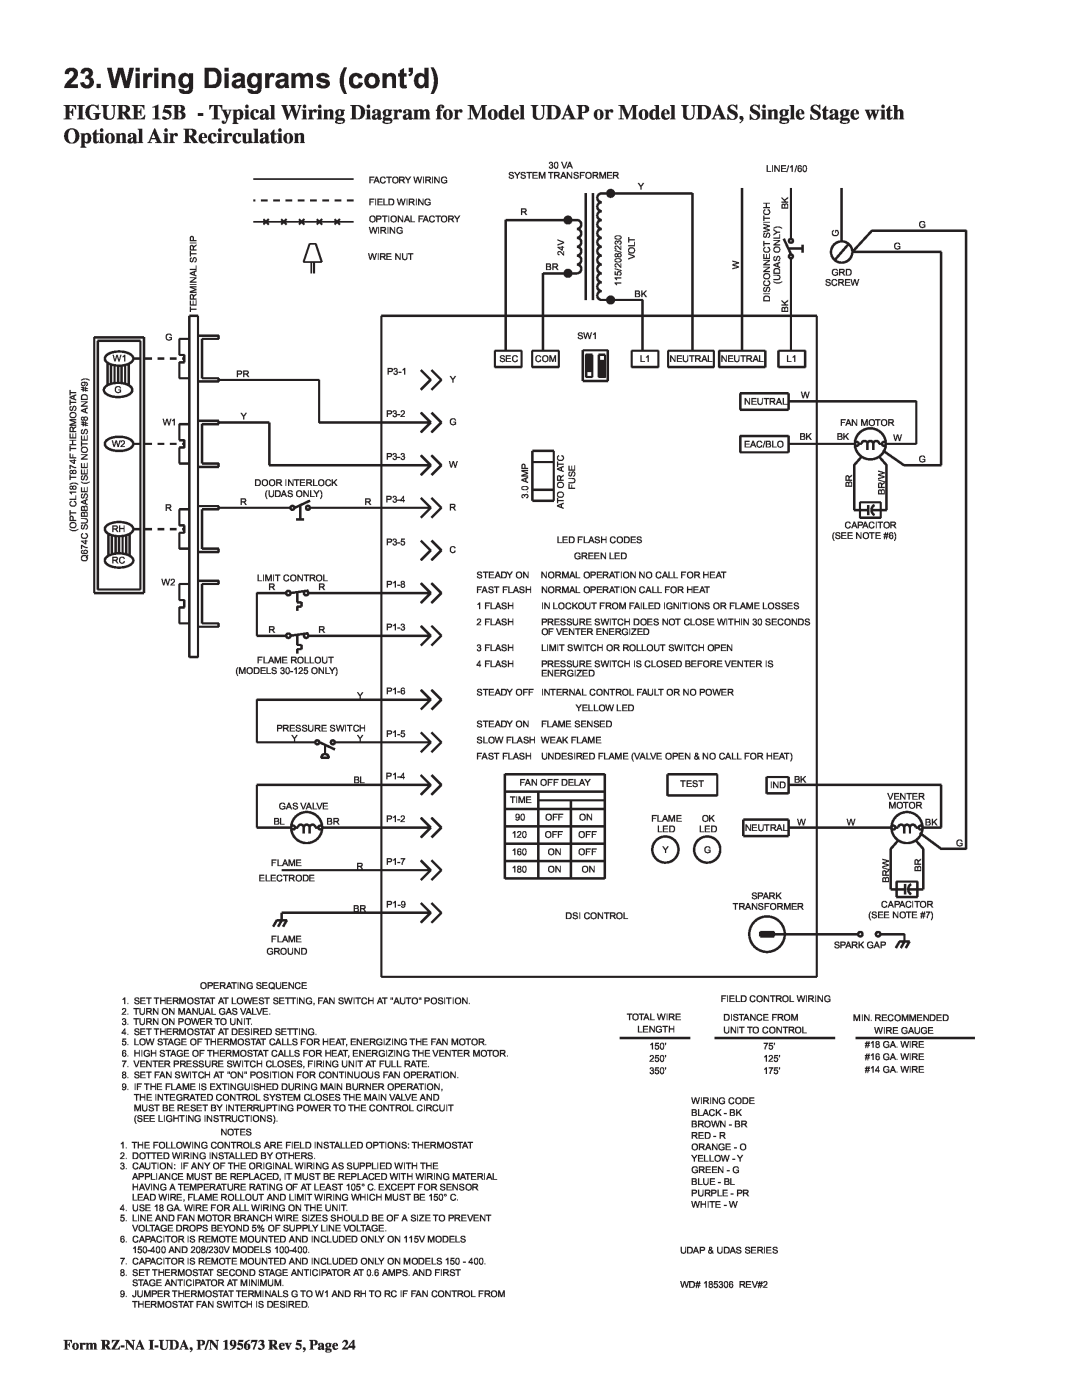 Thomas & Betts UDAS, UDAP dimensions Wiring Diagrams cont’d, Form RZ-NA I-UDA,P/N 195673 Rev 5, Page 